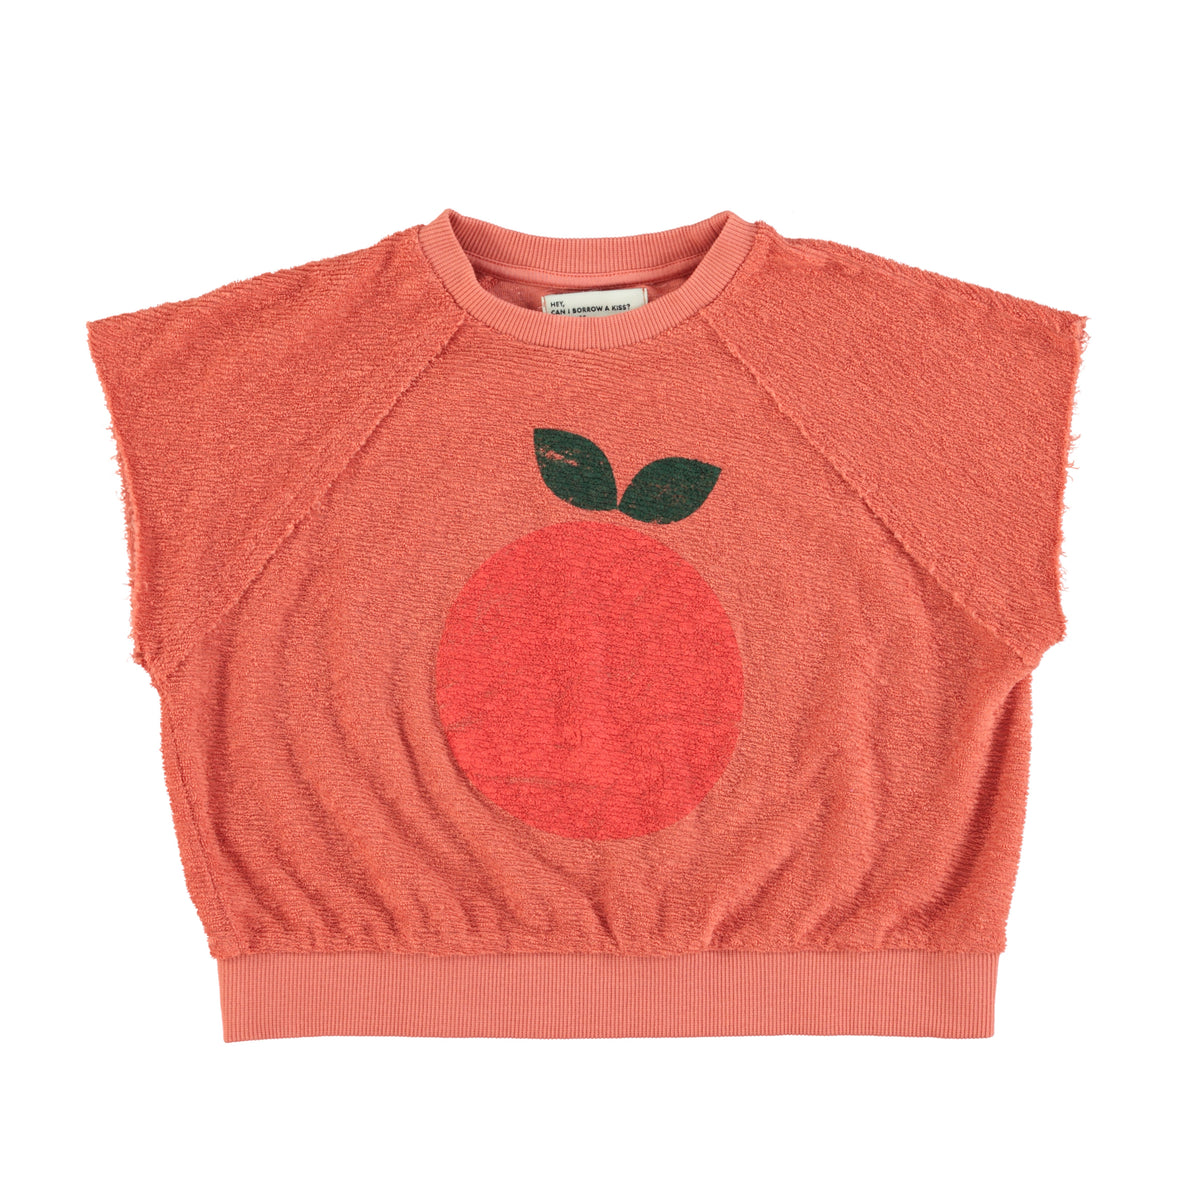 Ärmelloses Shirt mit Apfel